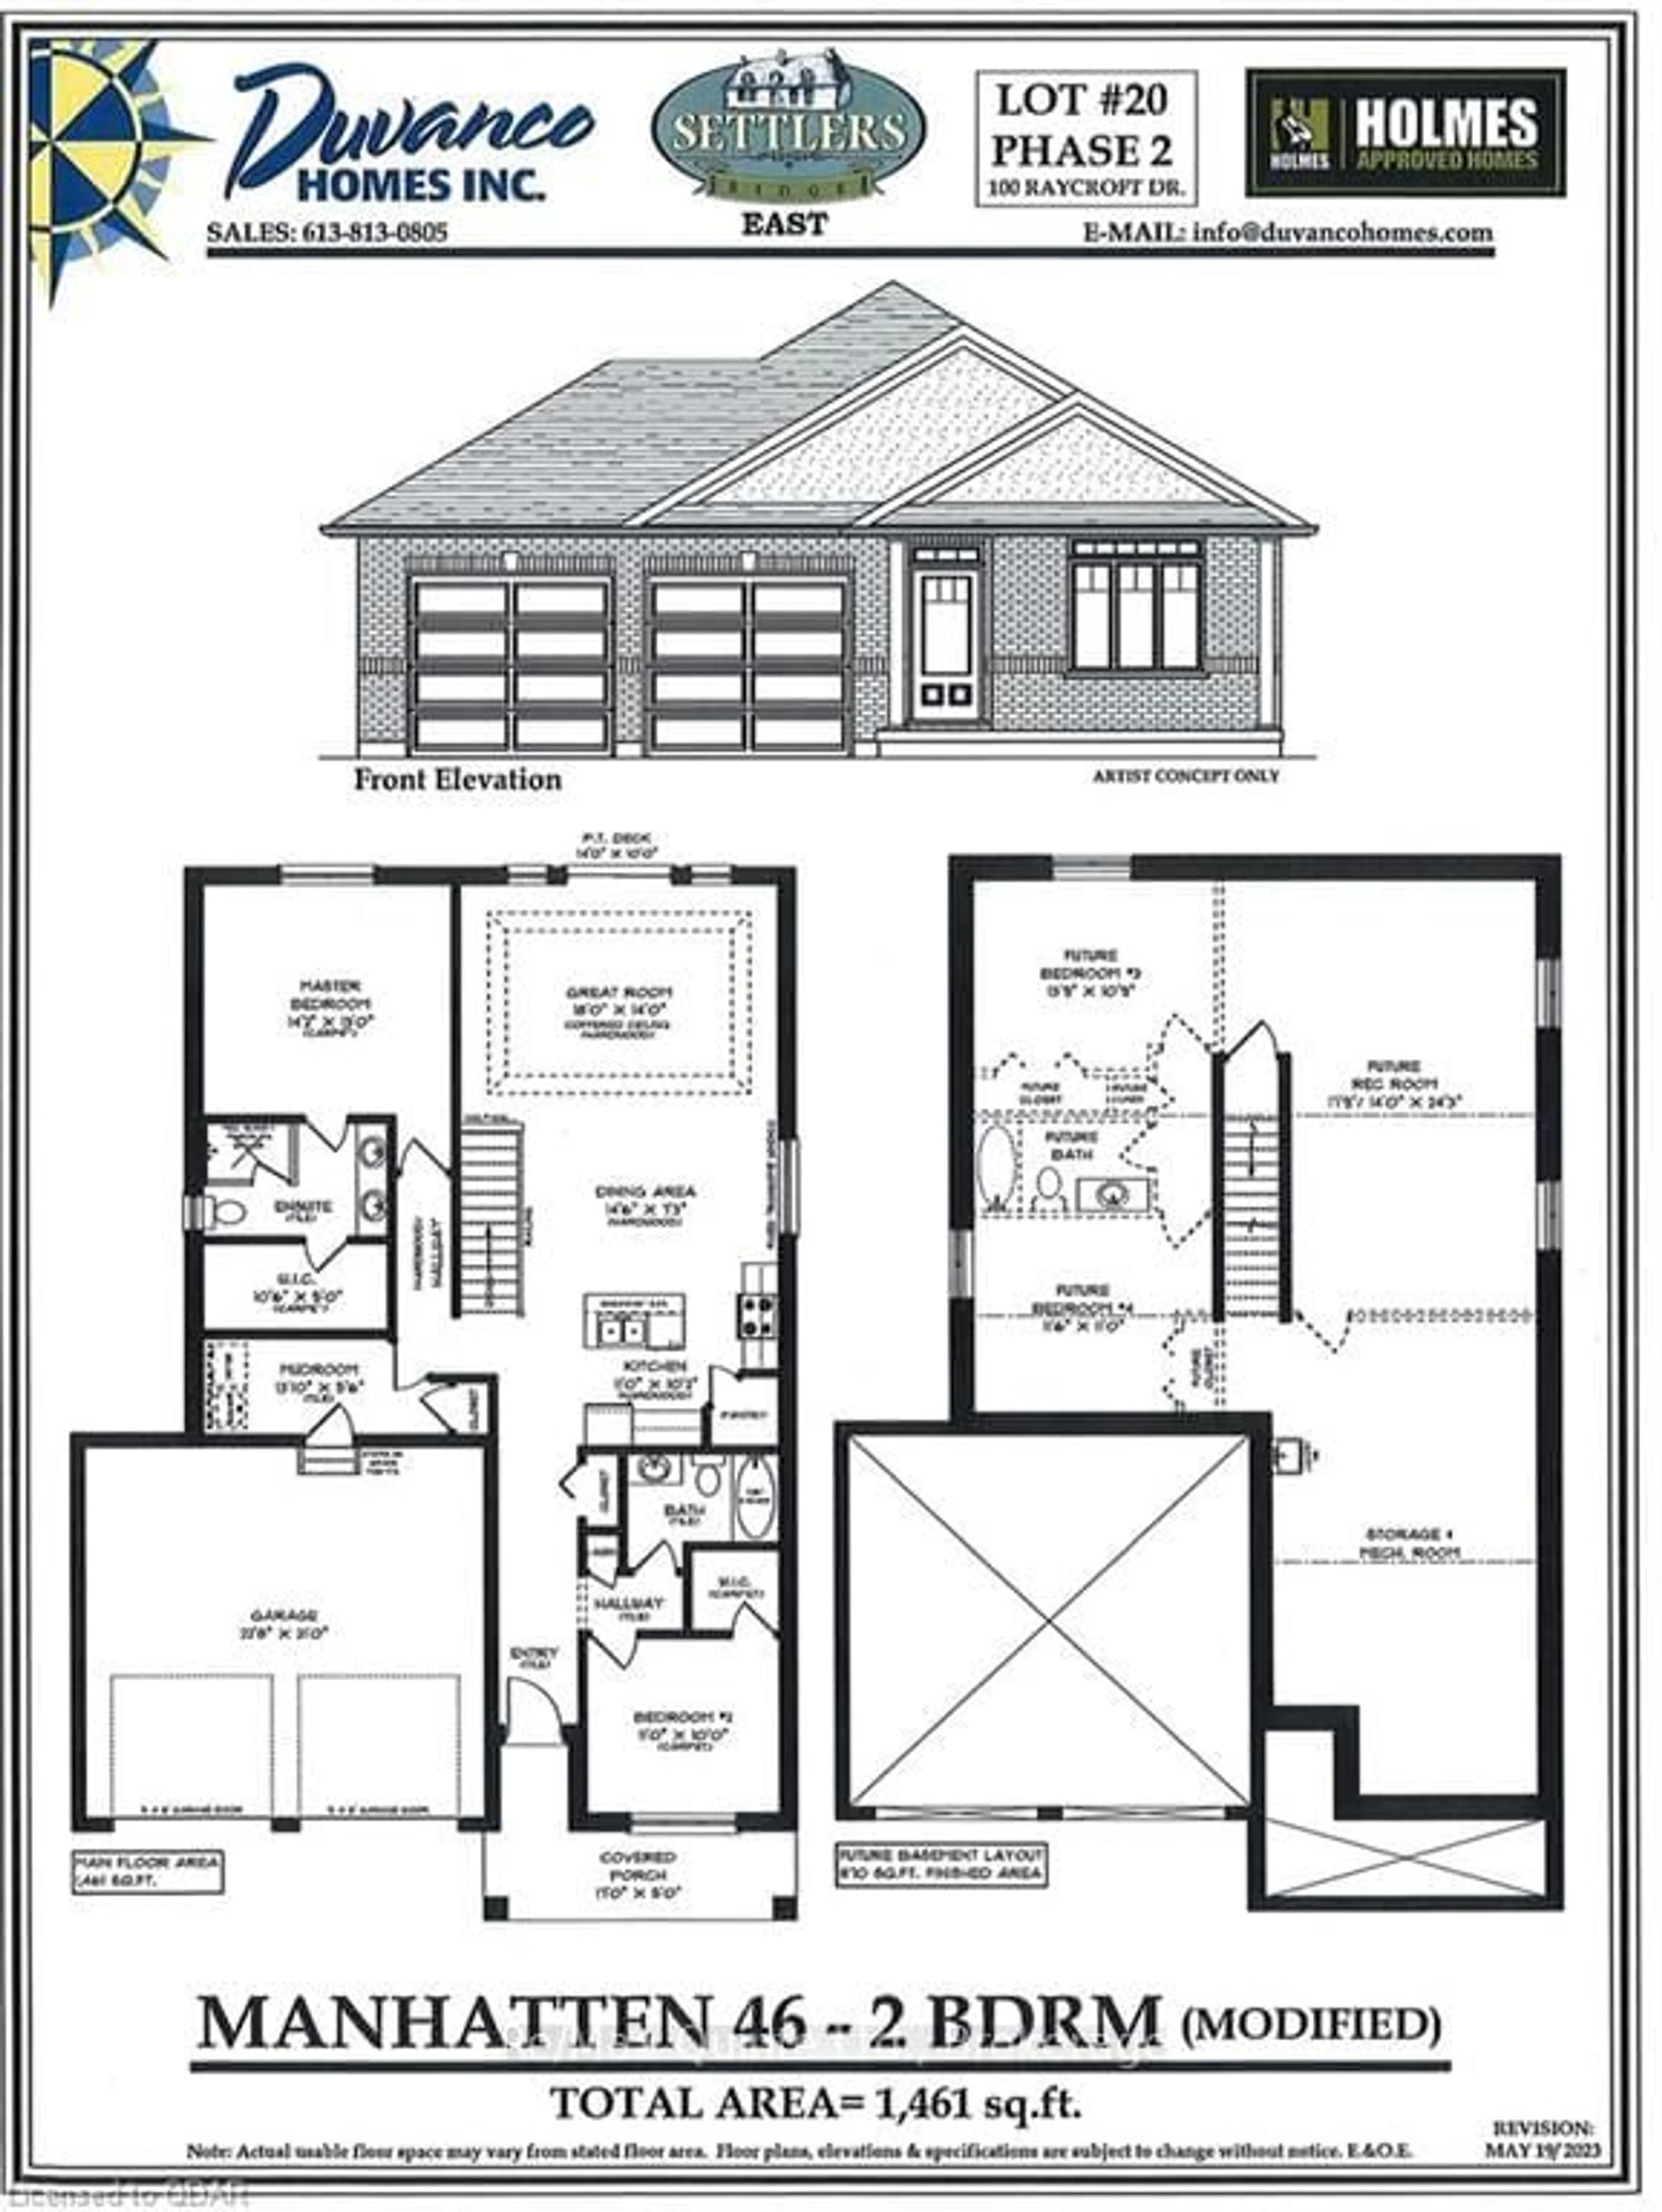 Floor plan for 100 Raycroft Dr, Belleville Ontario K8N 0R5